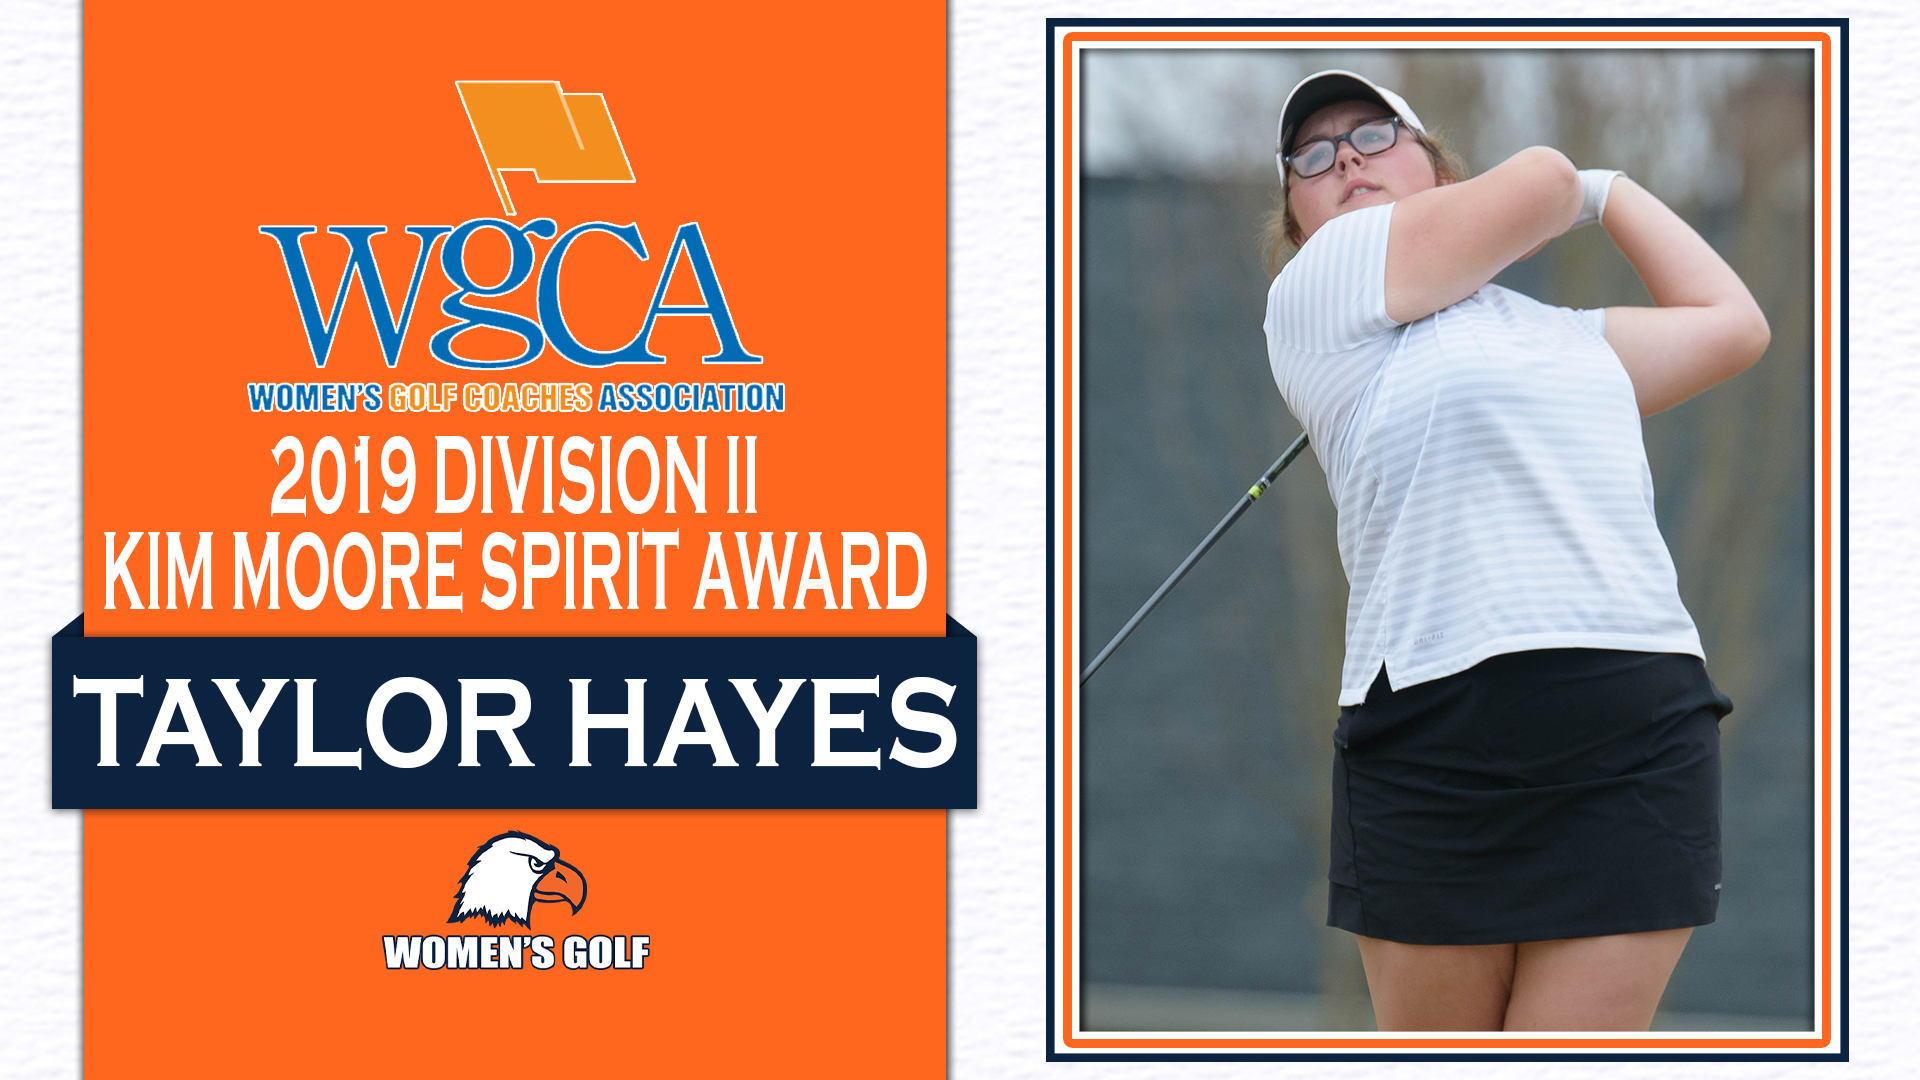 Hayes lauded with WGCA's Kim Moore Spirit Award